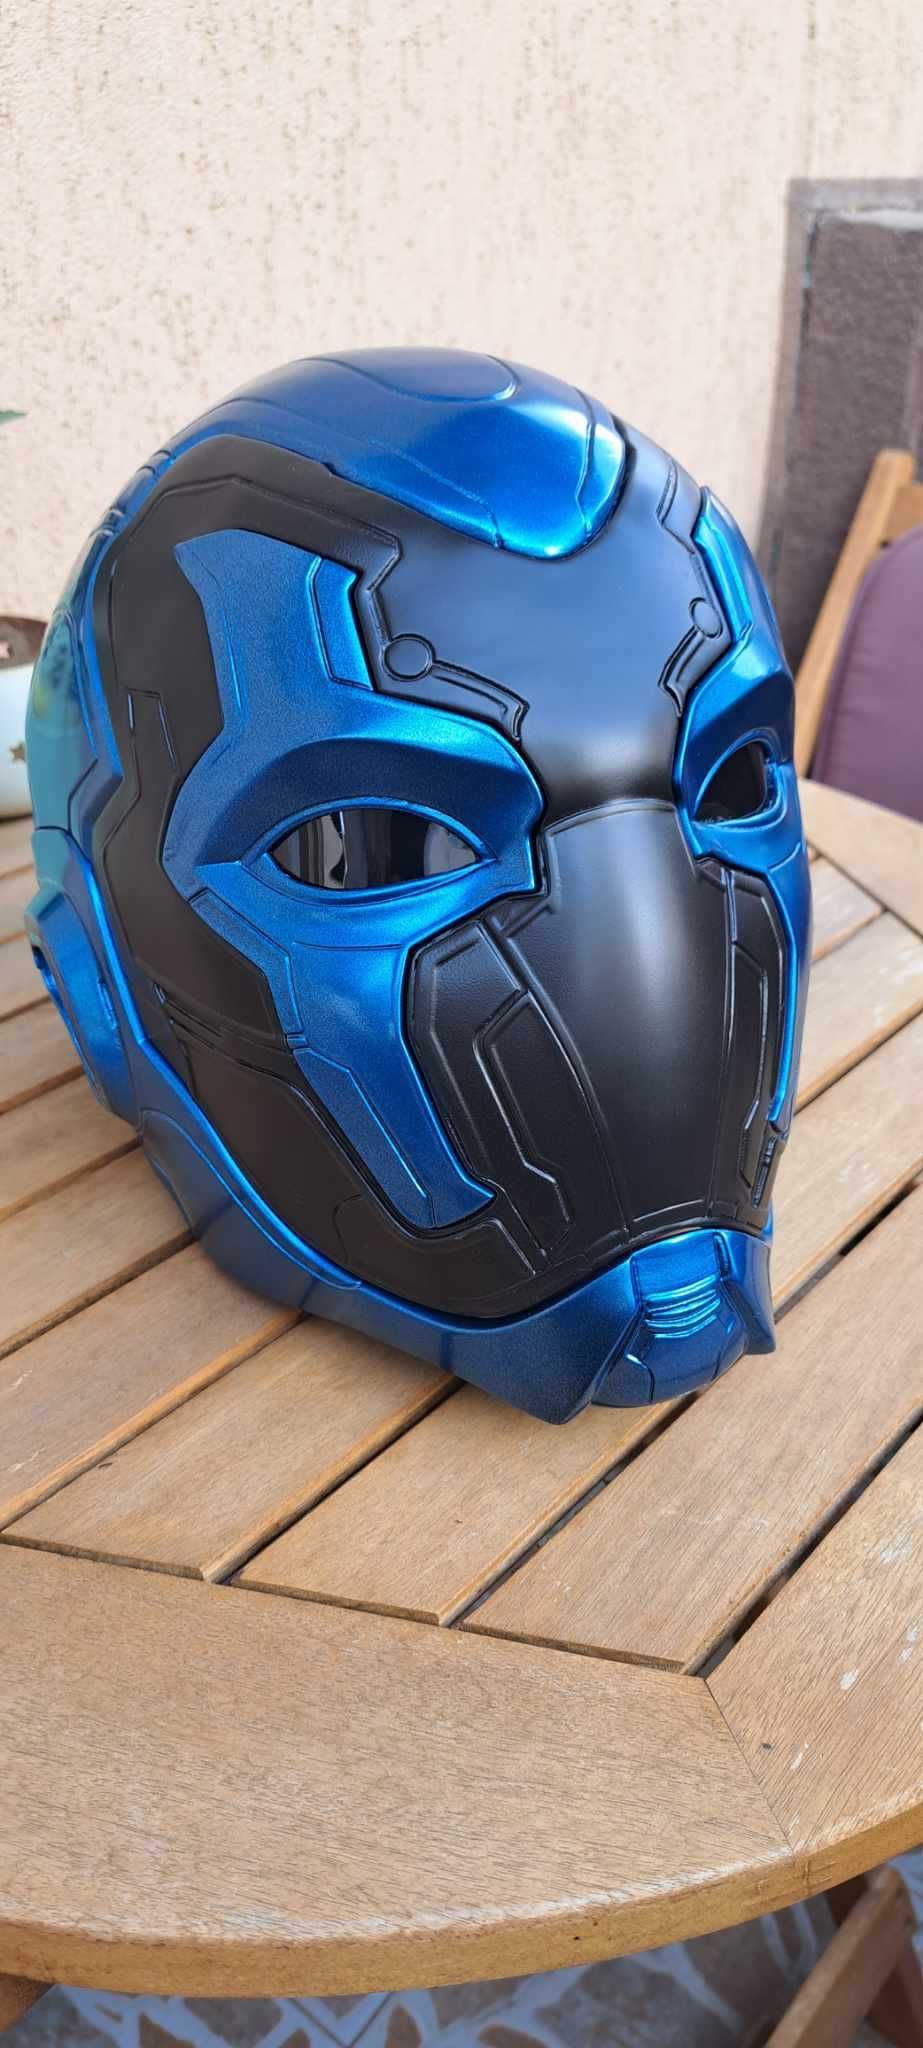 Casca/helmet Blue Beetle 3D print cosplay